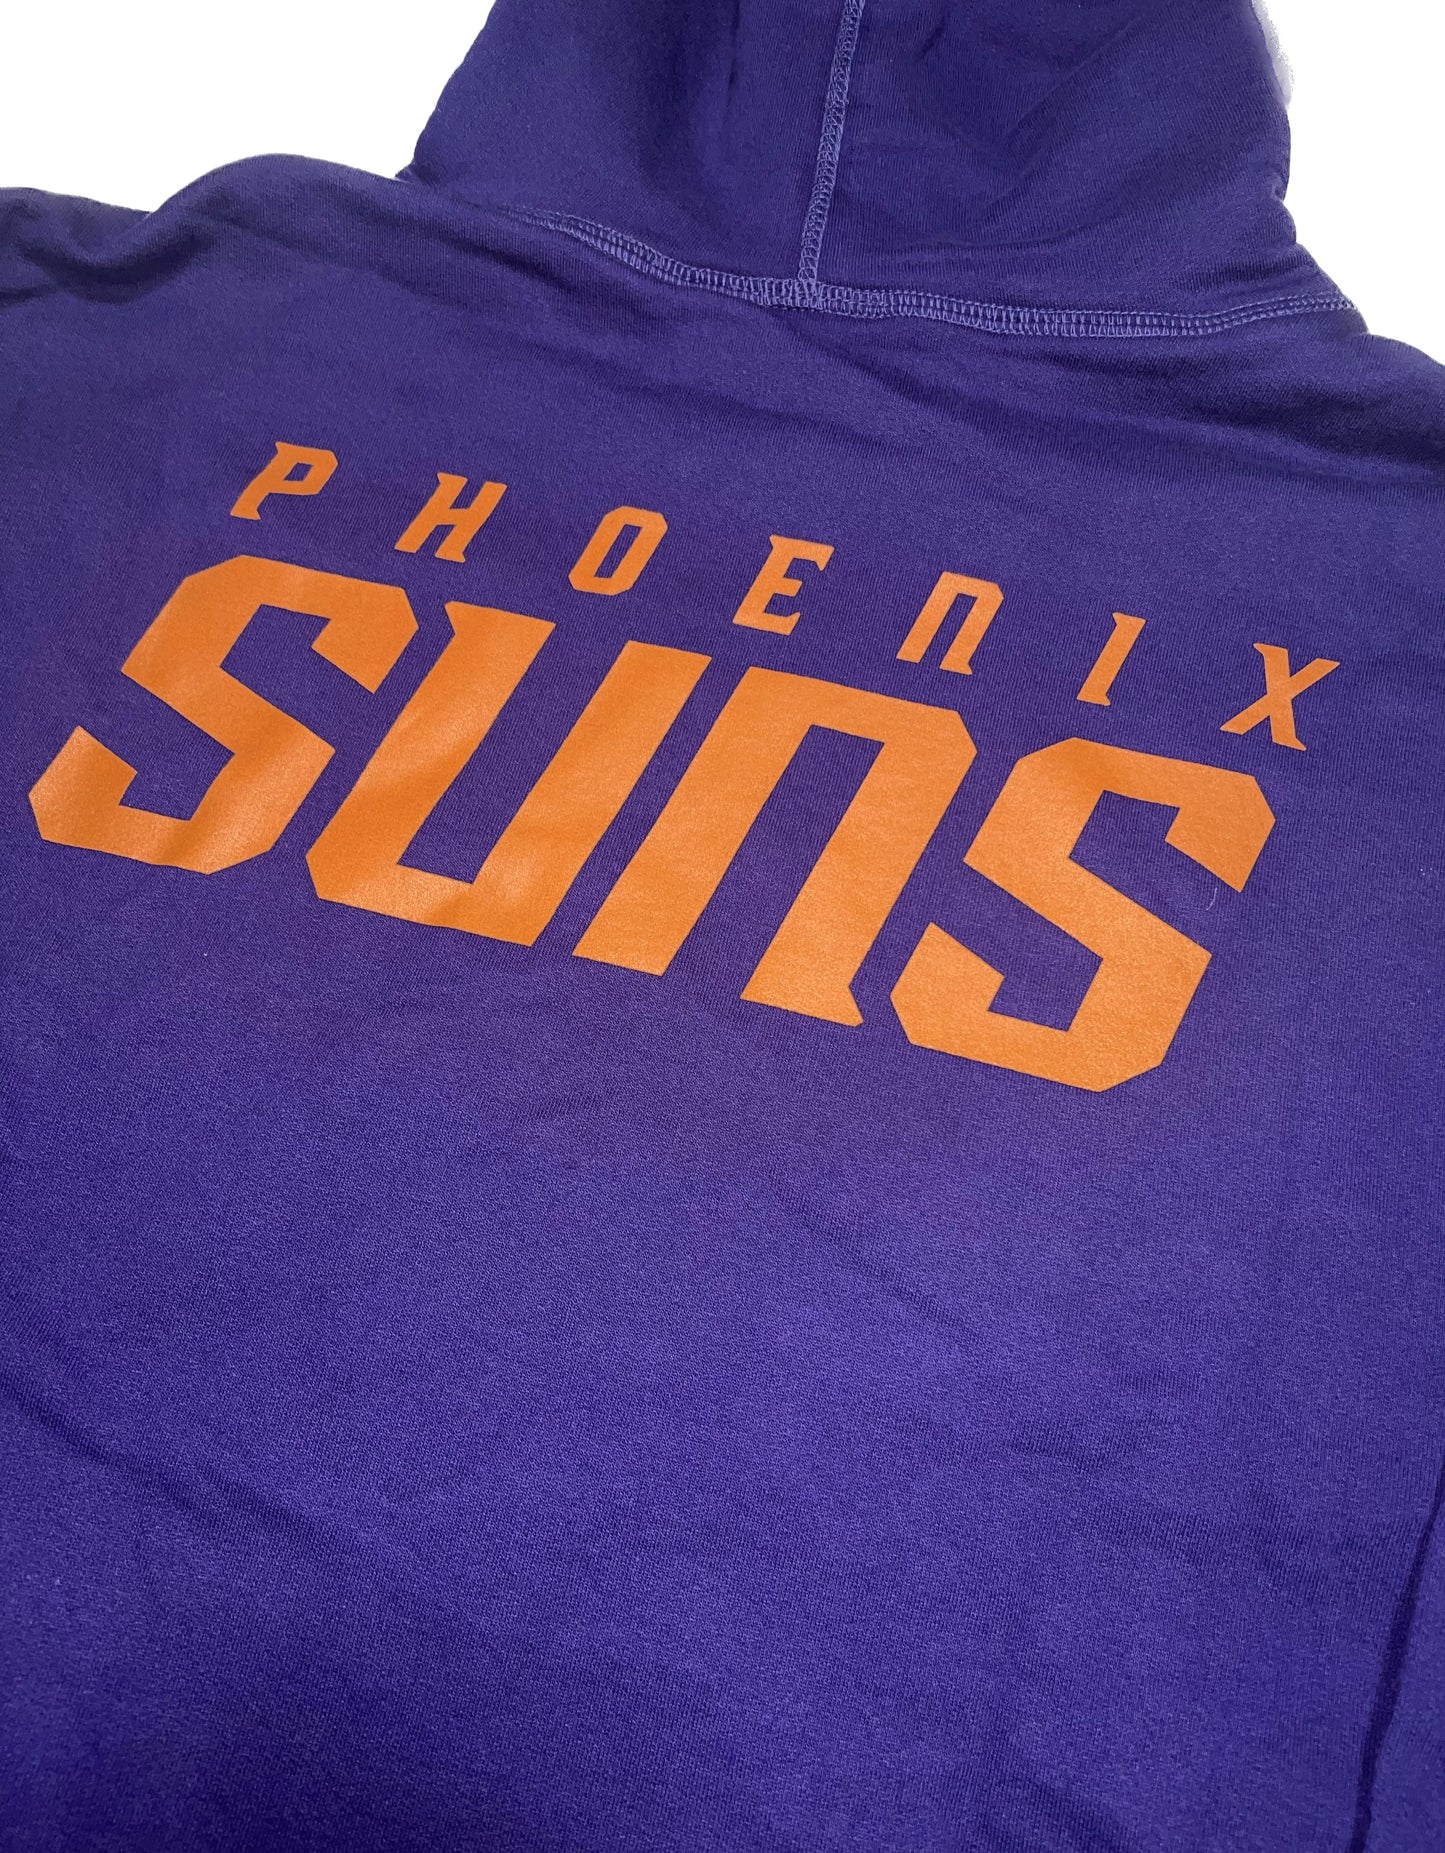 OVO x NBA Phoenix Suns Hoodie